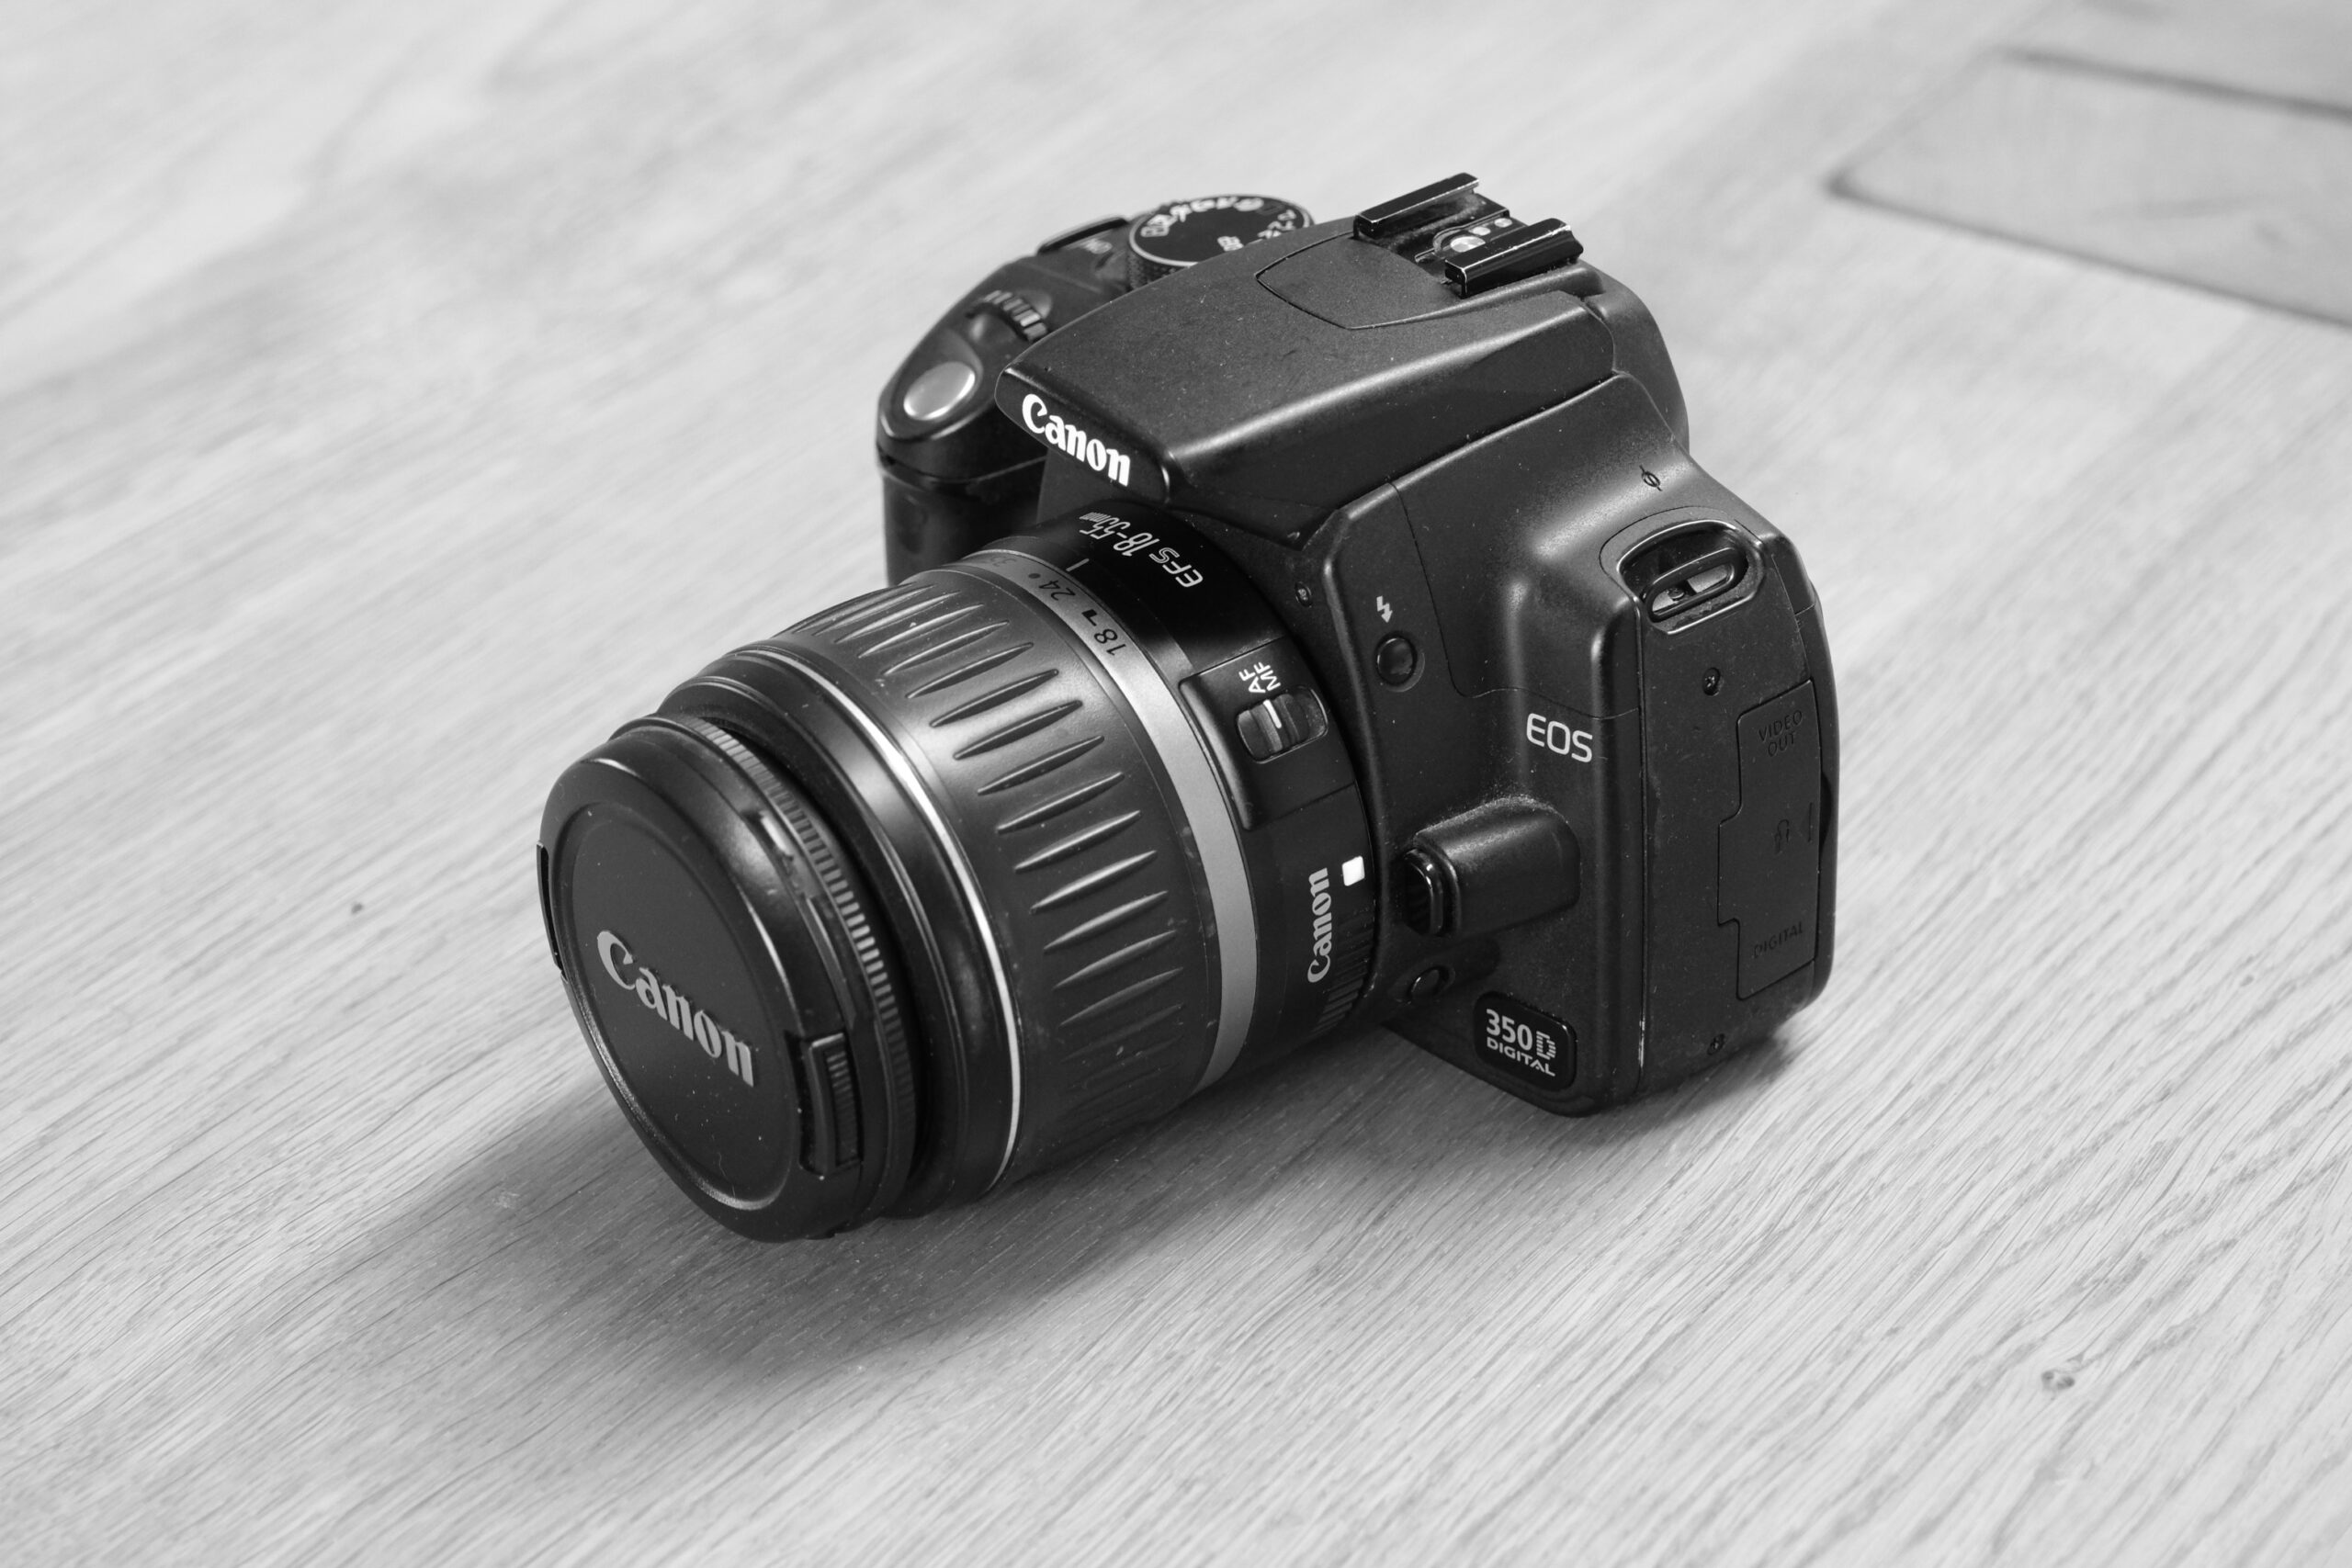 Mono-Conversion of a Canon 350D [Video]